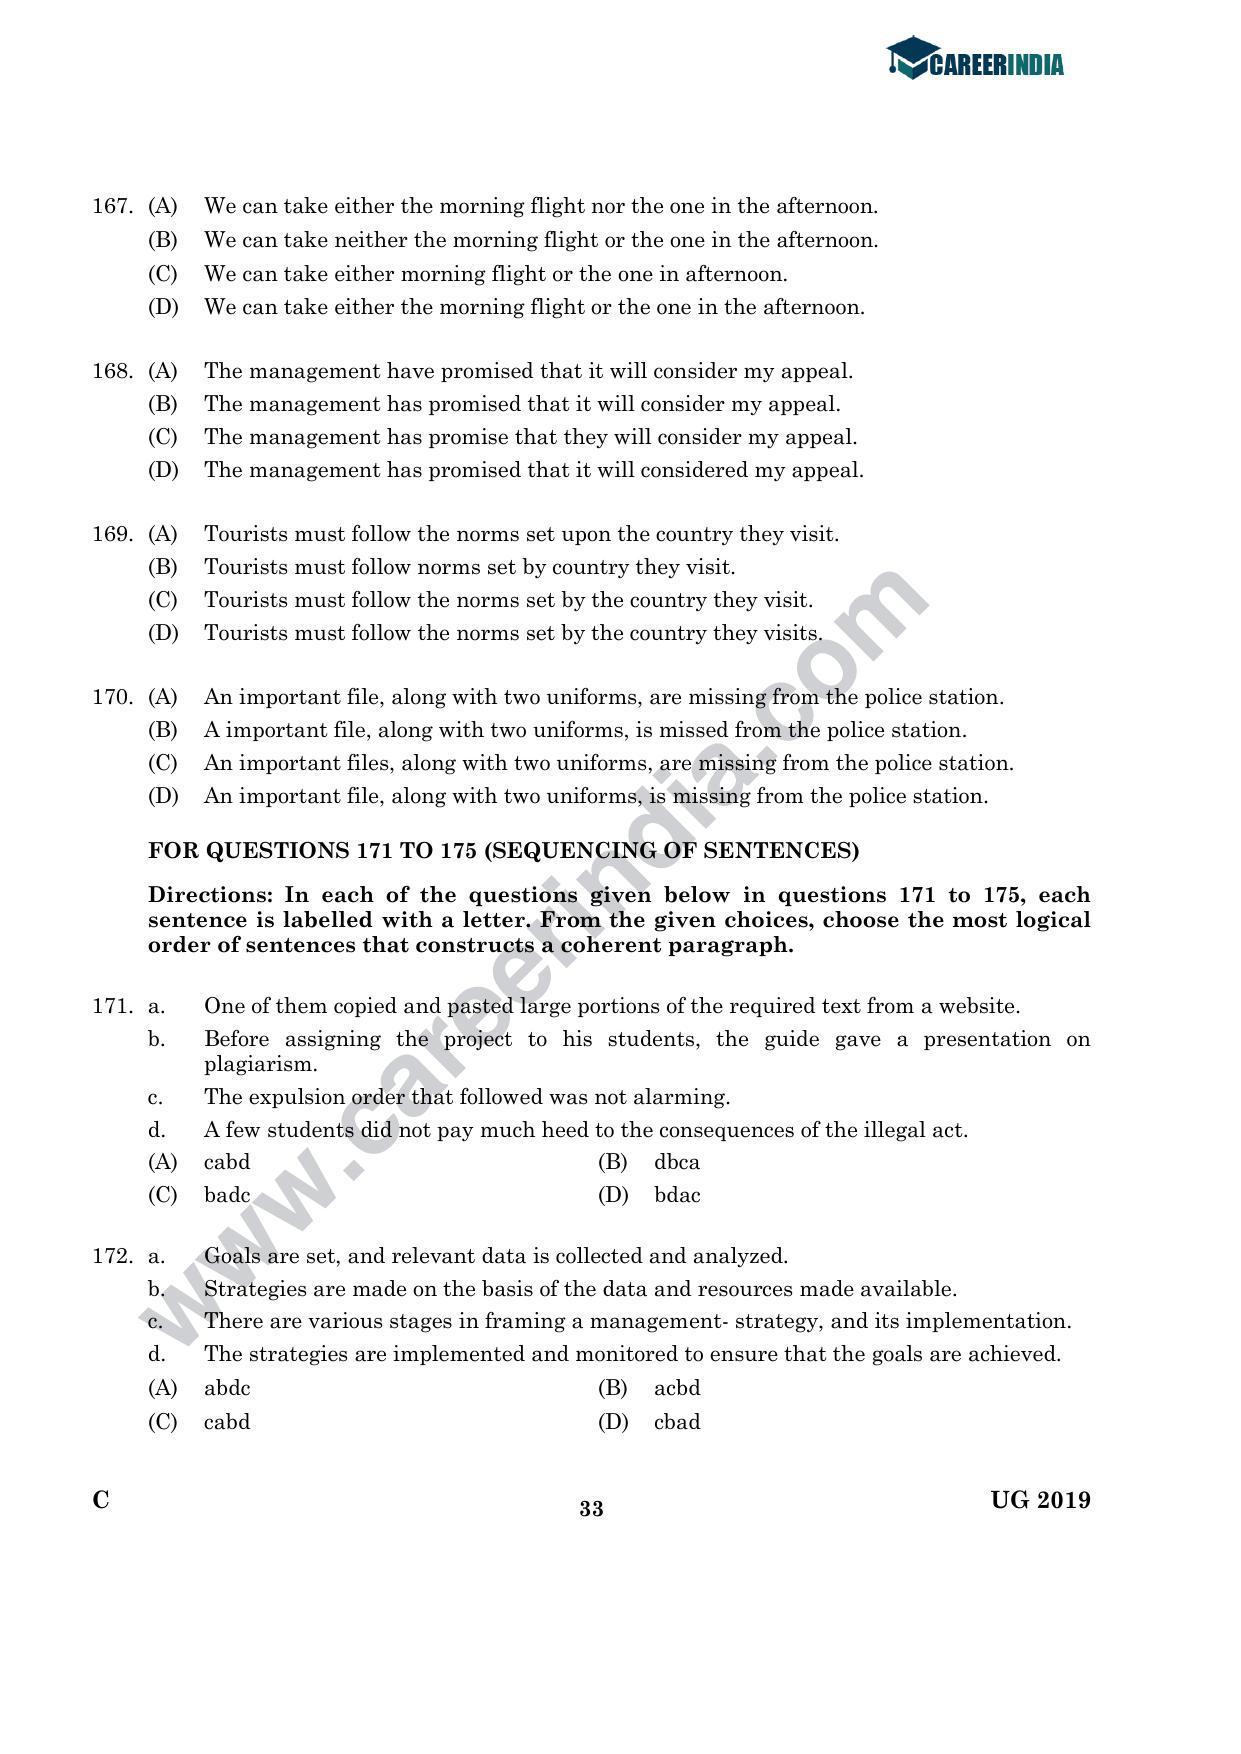 CLAT 2019 UG Legal-Aptitude Question Paper - Page 32